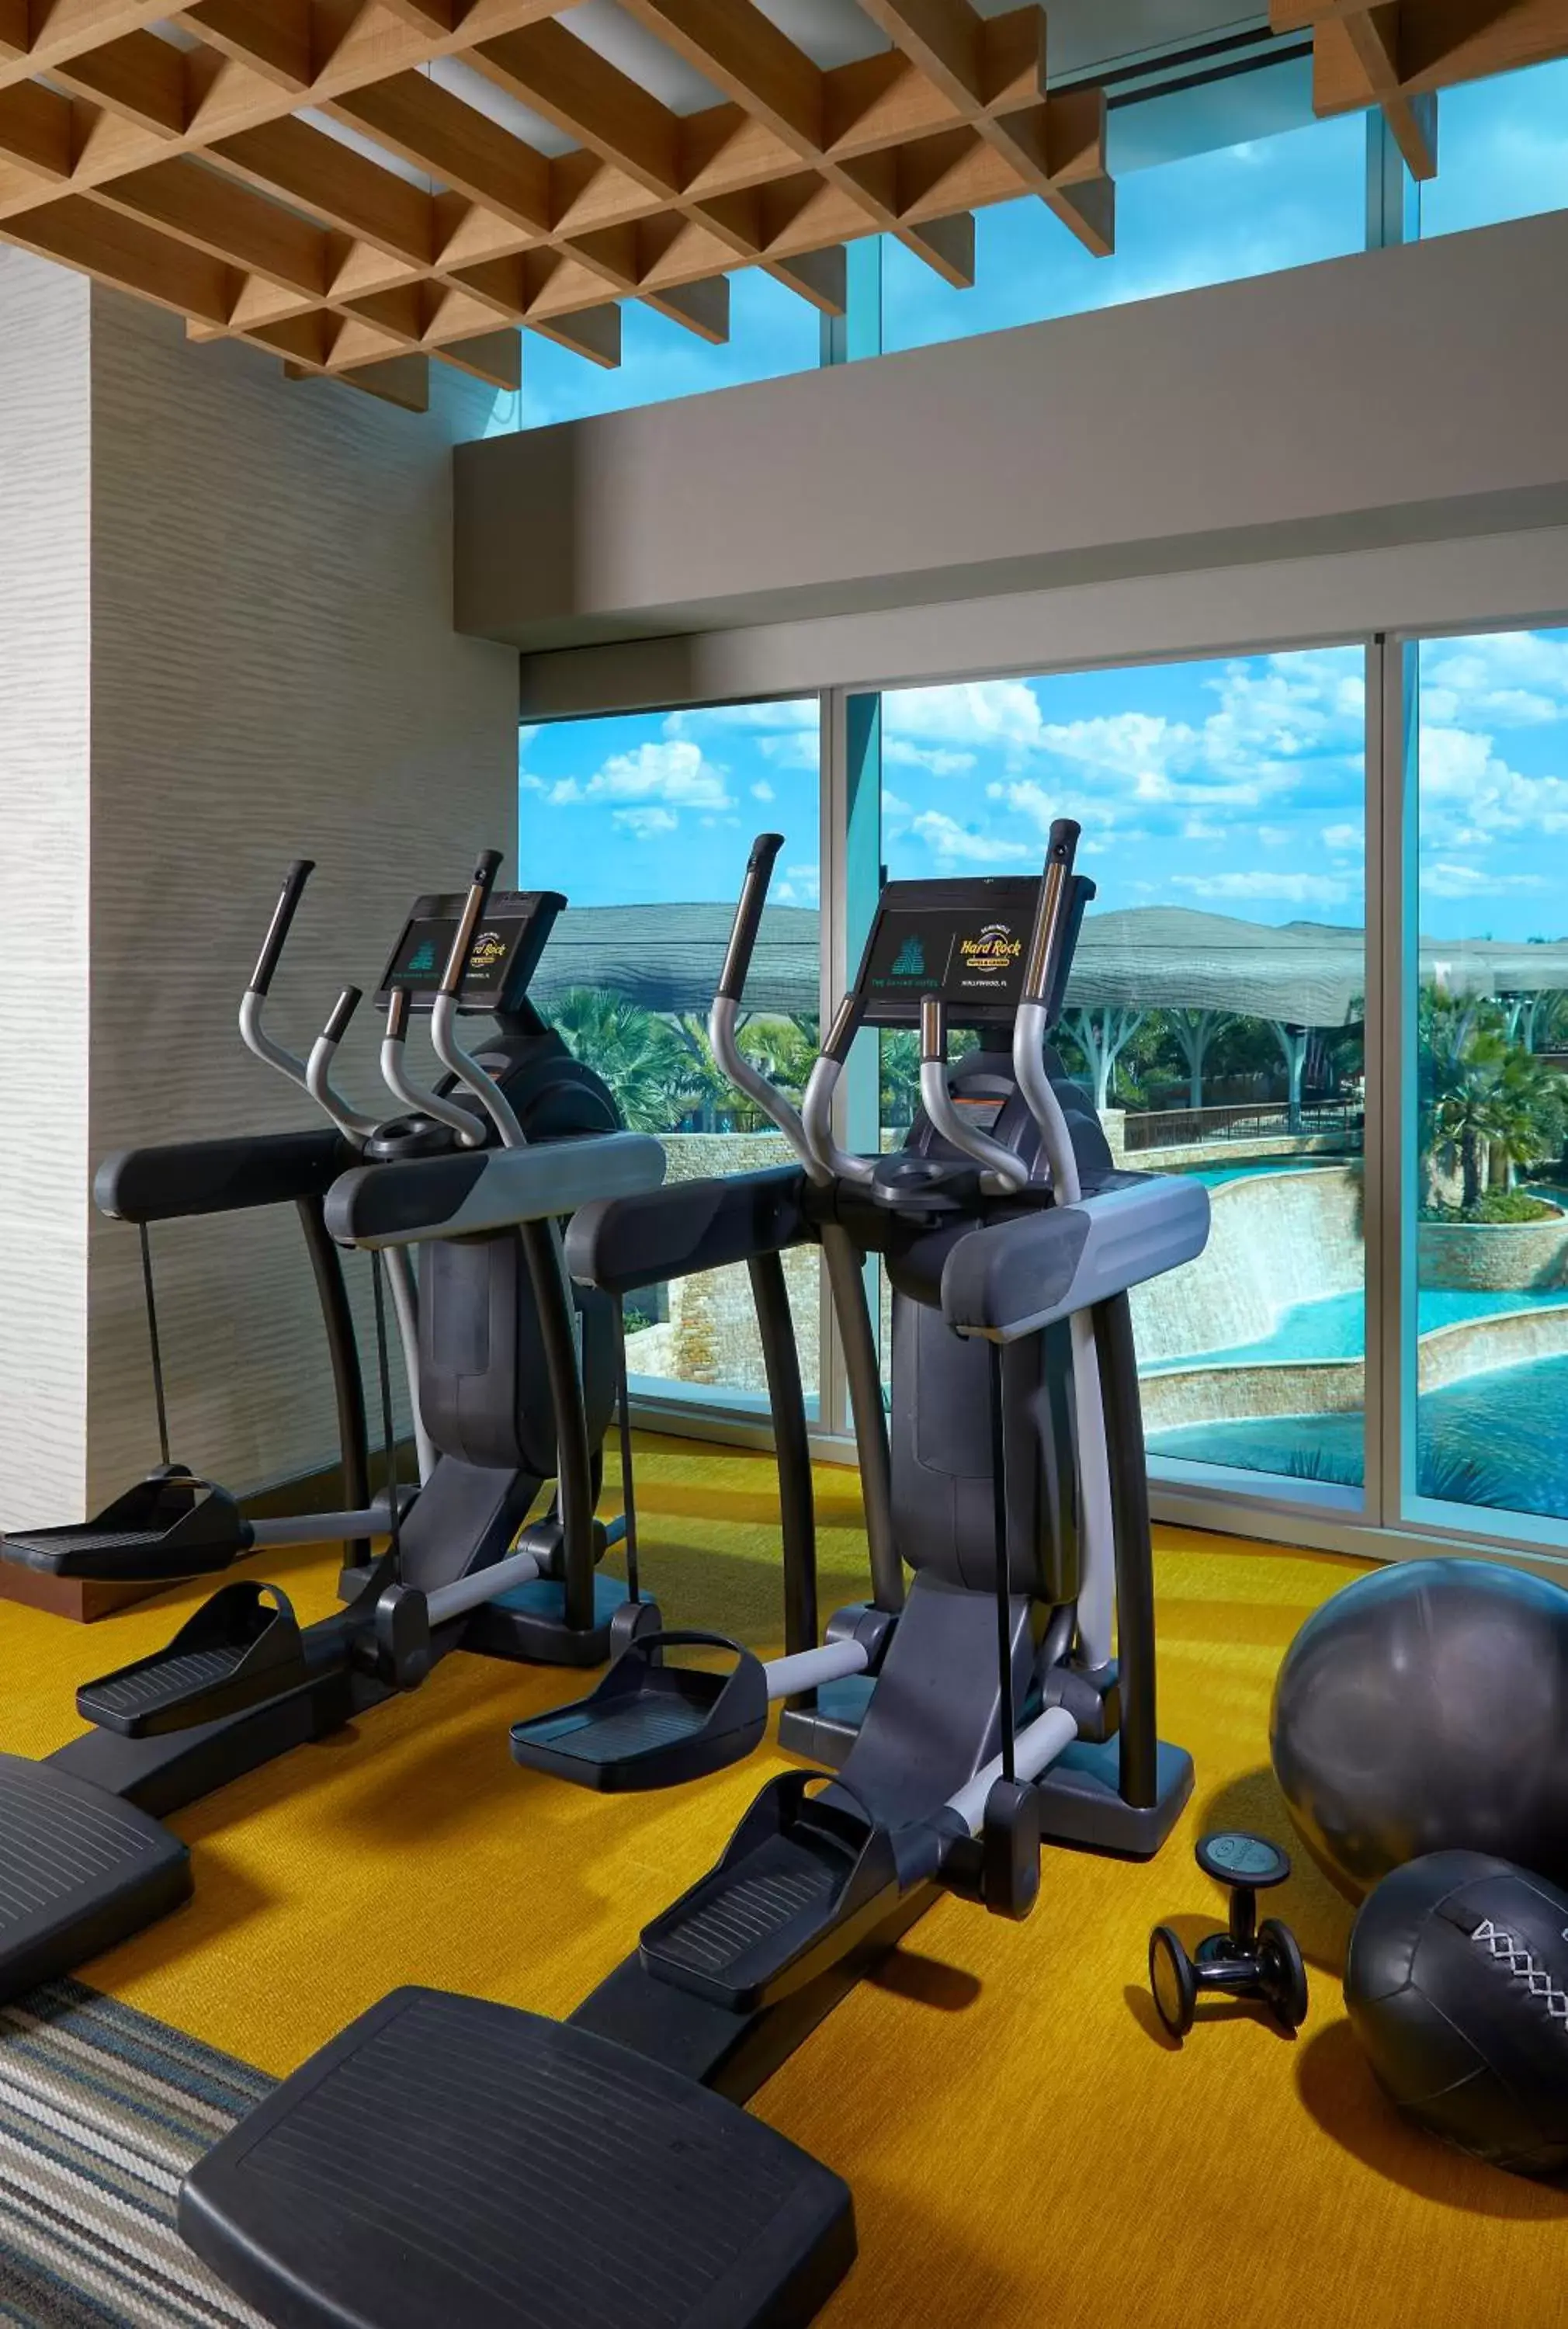 Fitness centre/facilities, Fitness Center/Facilities in The Guitar Hotel at Seminole Hard Rock Hotel & Casino